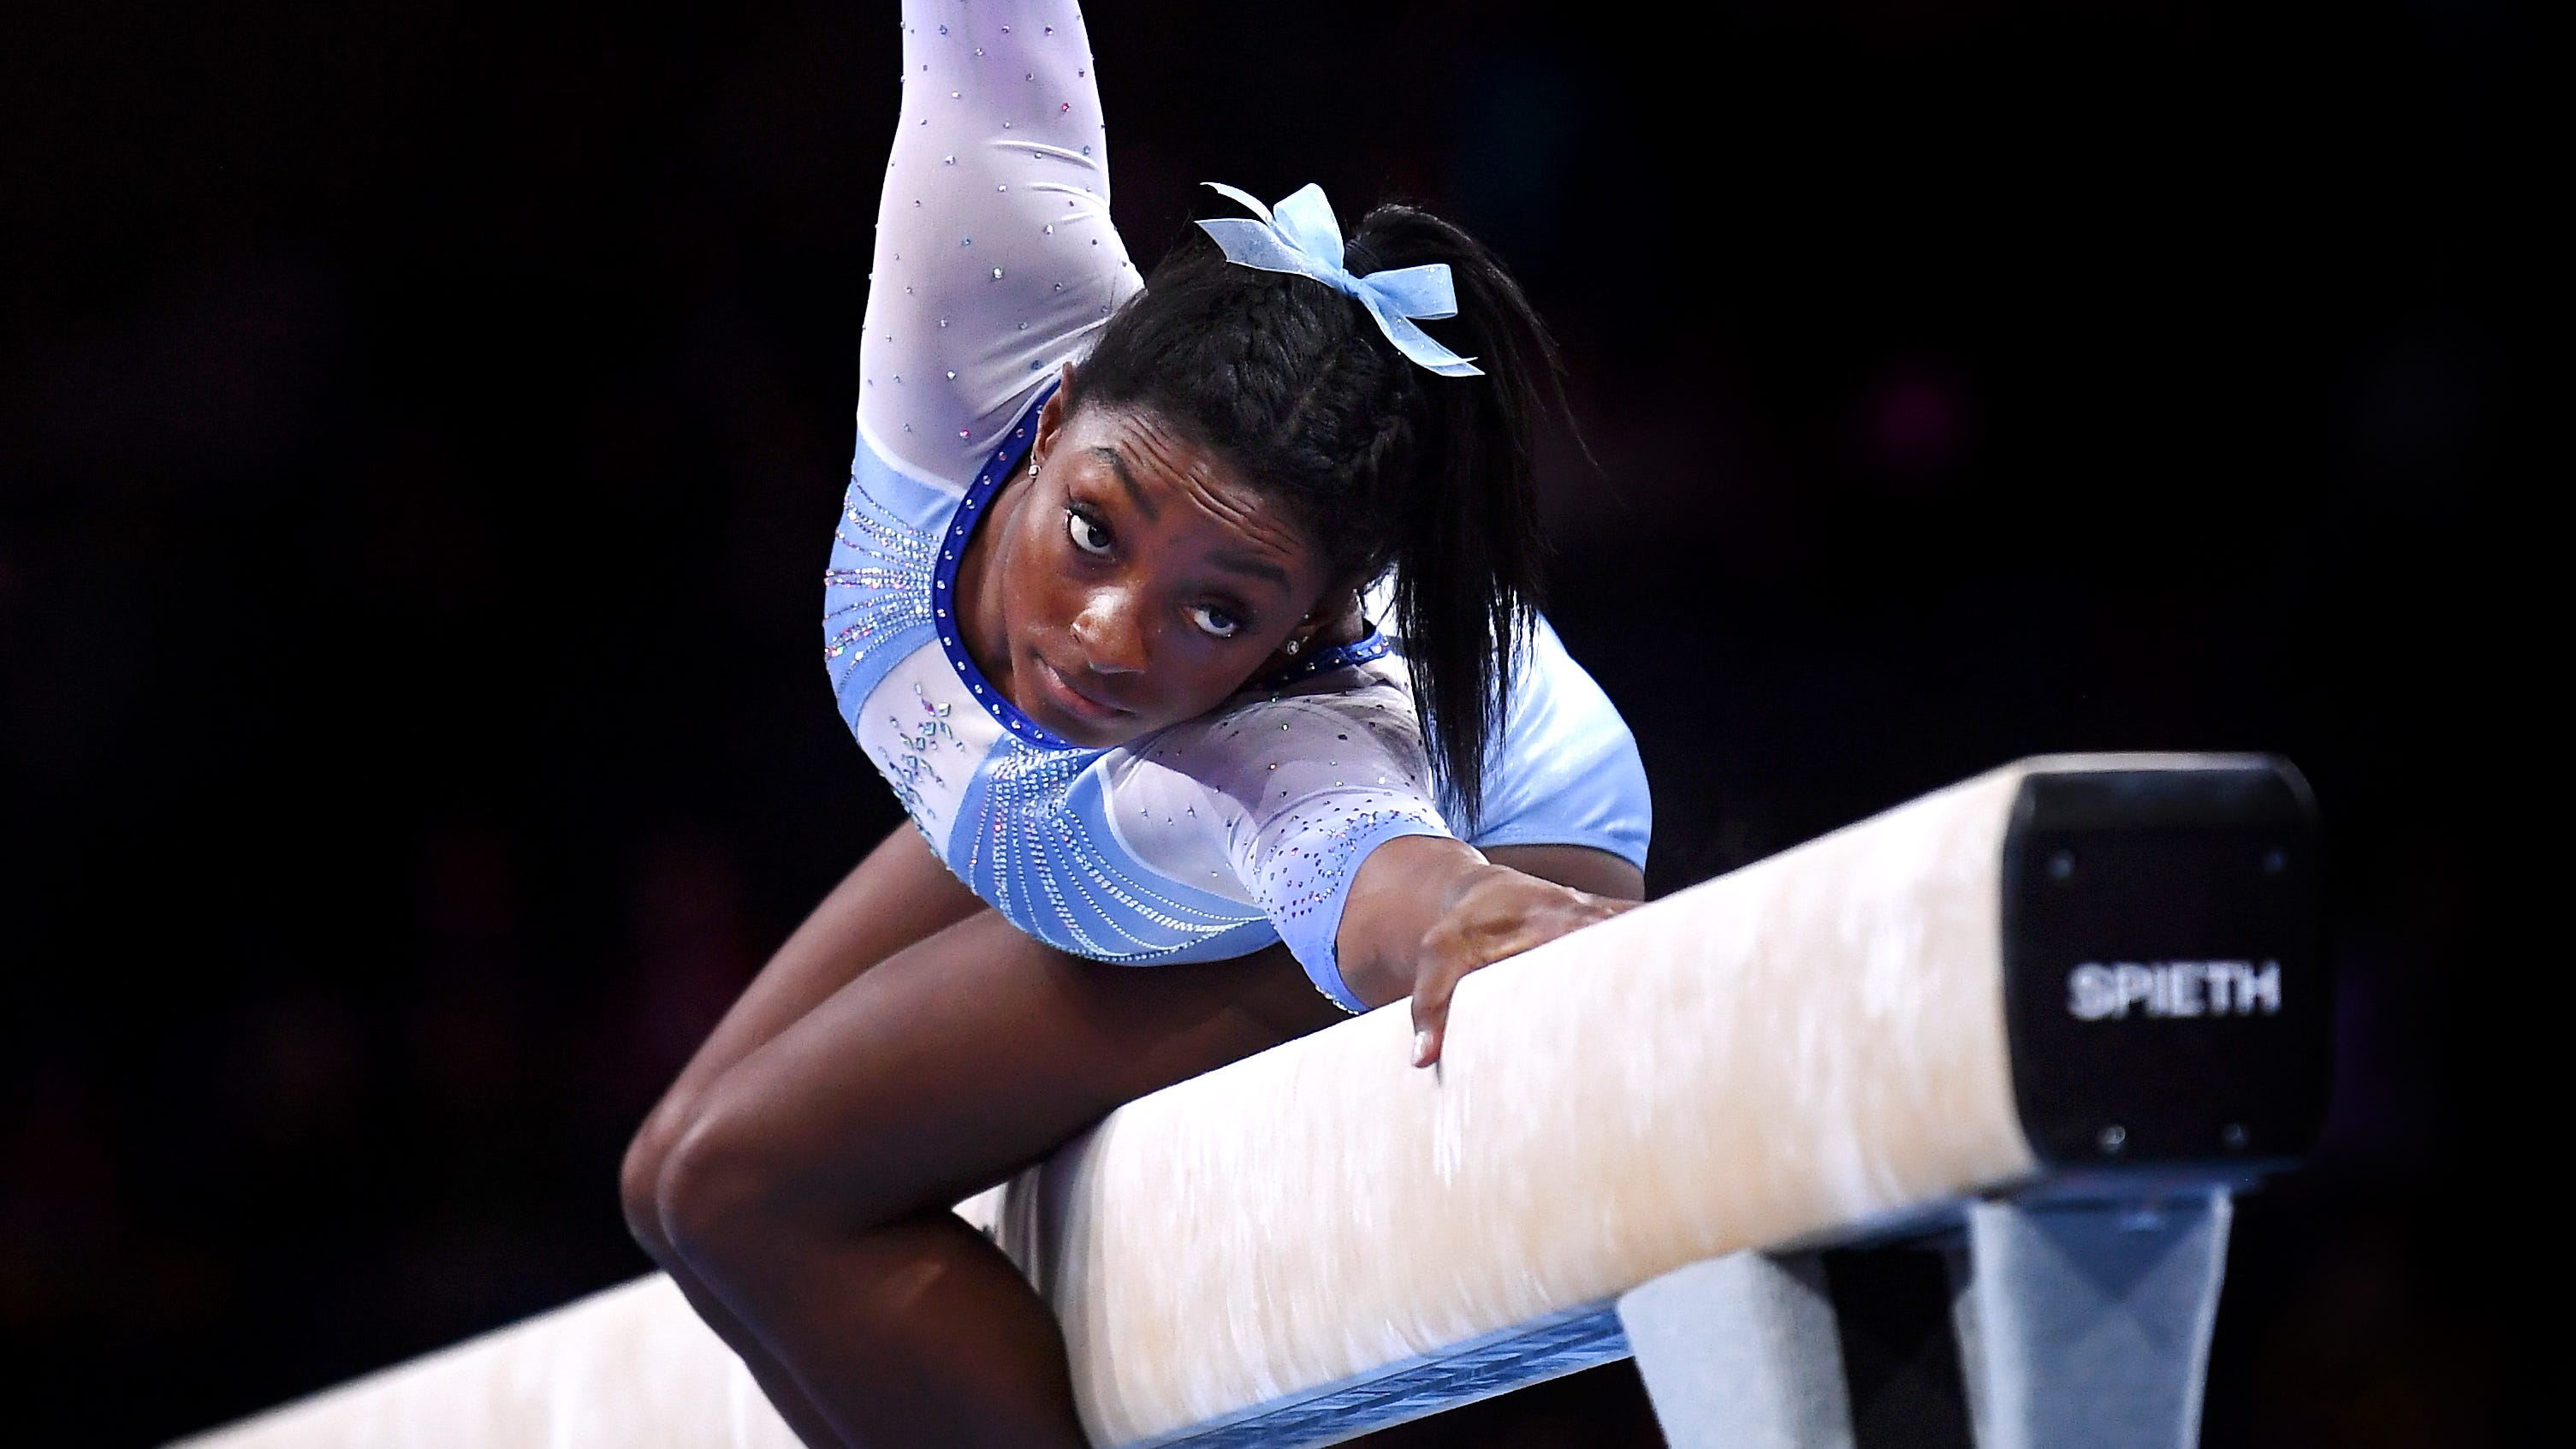 Simone Biles, at gymnastics championships, makes new skills look easy